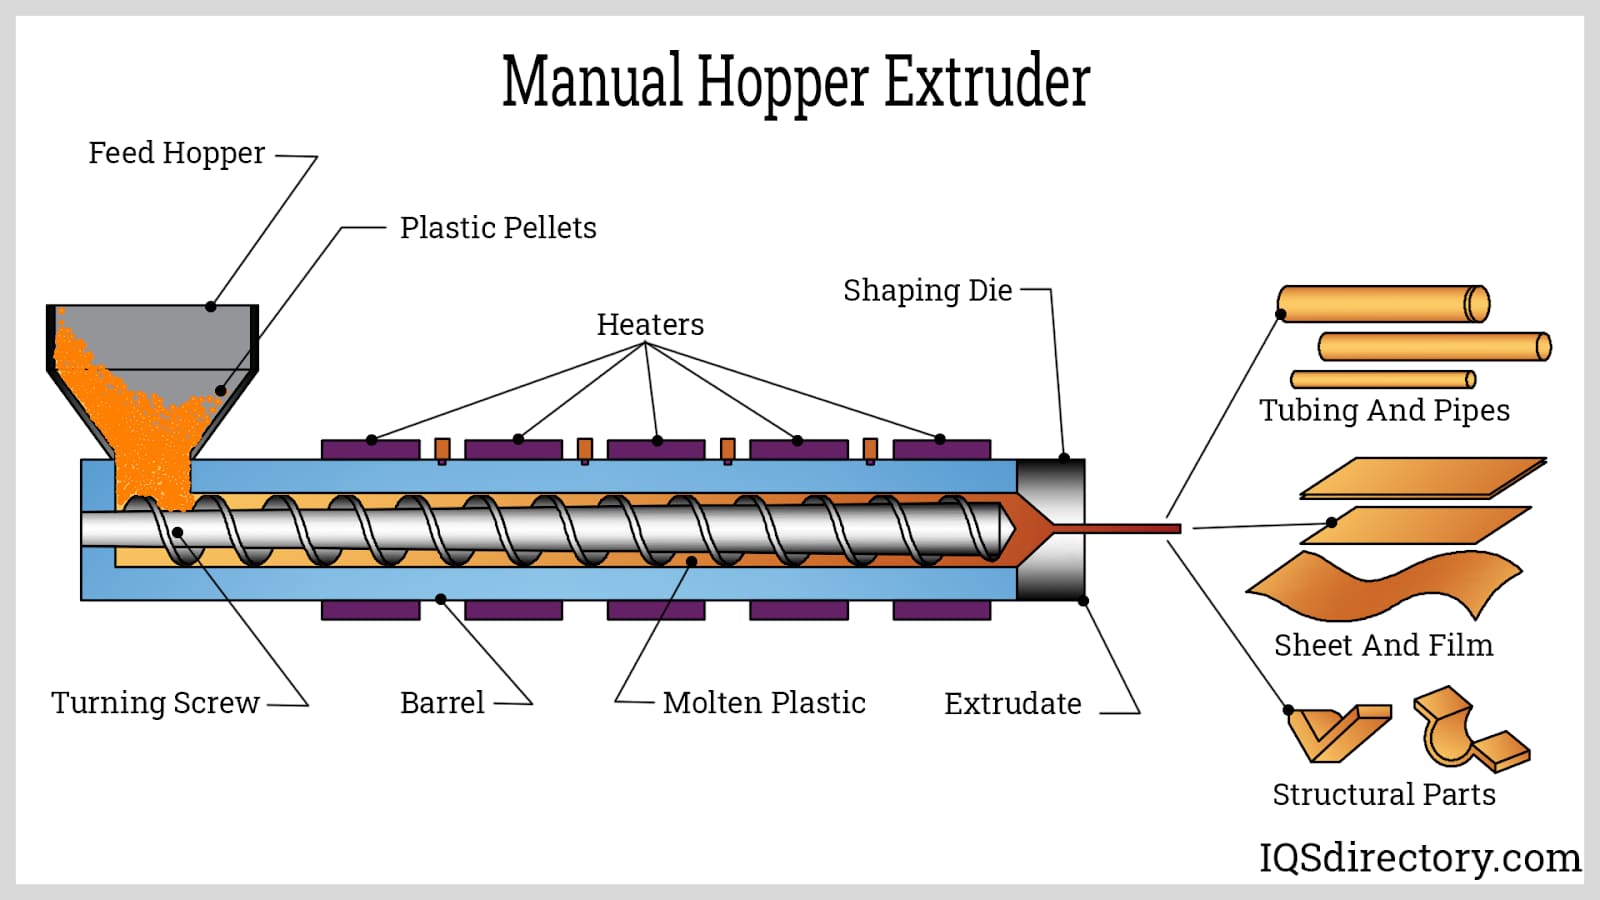 Manual Hopper Extuder